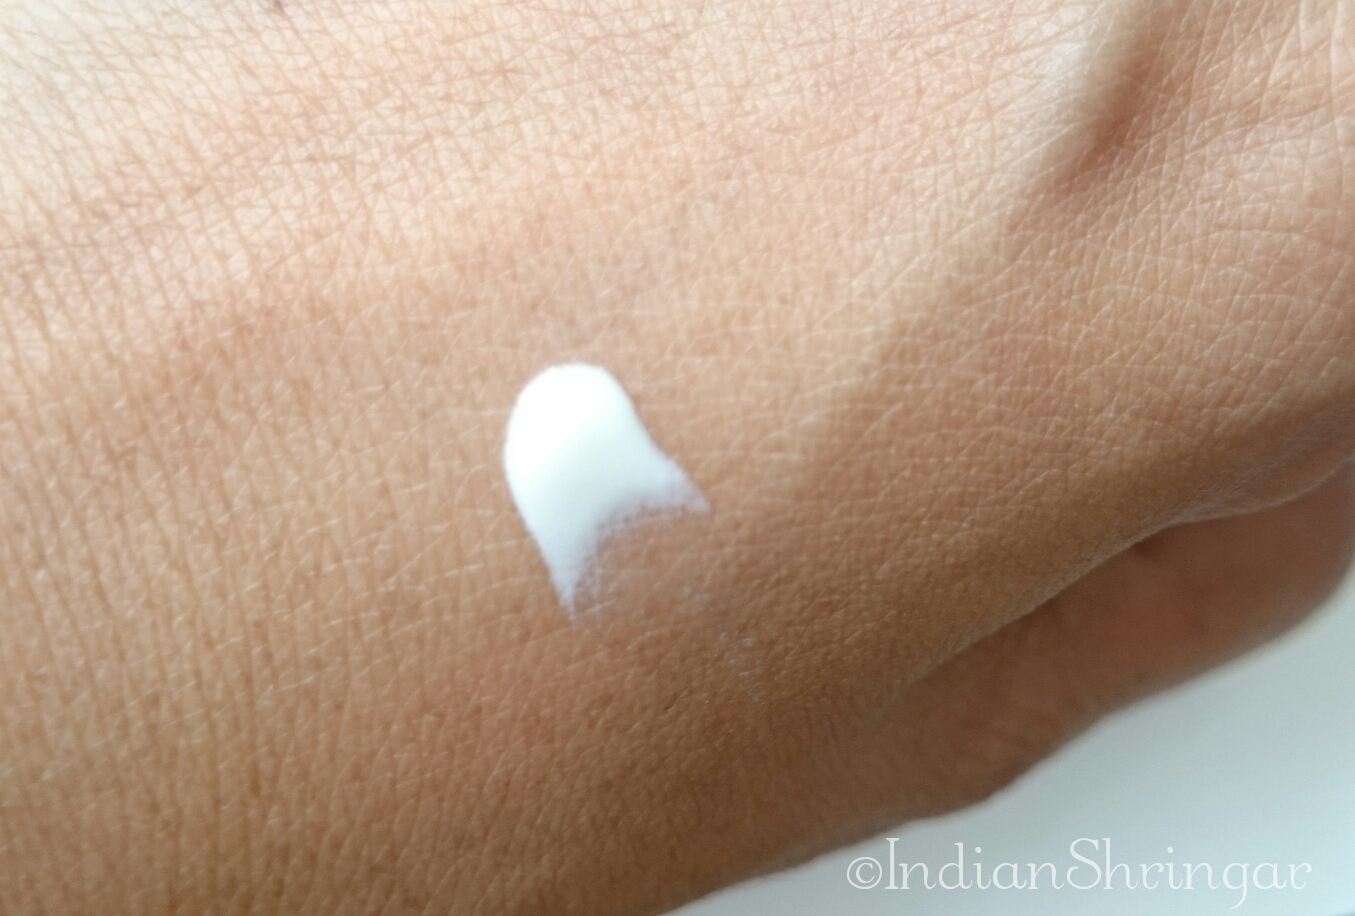 The Body Shop White Shiso Eye Cream review